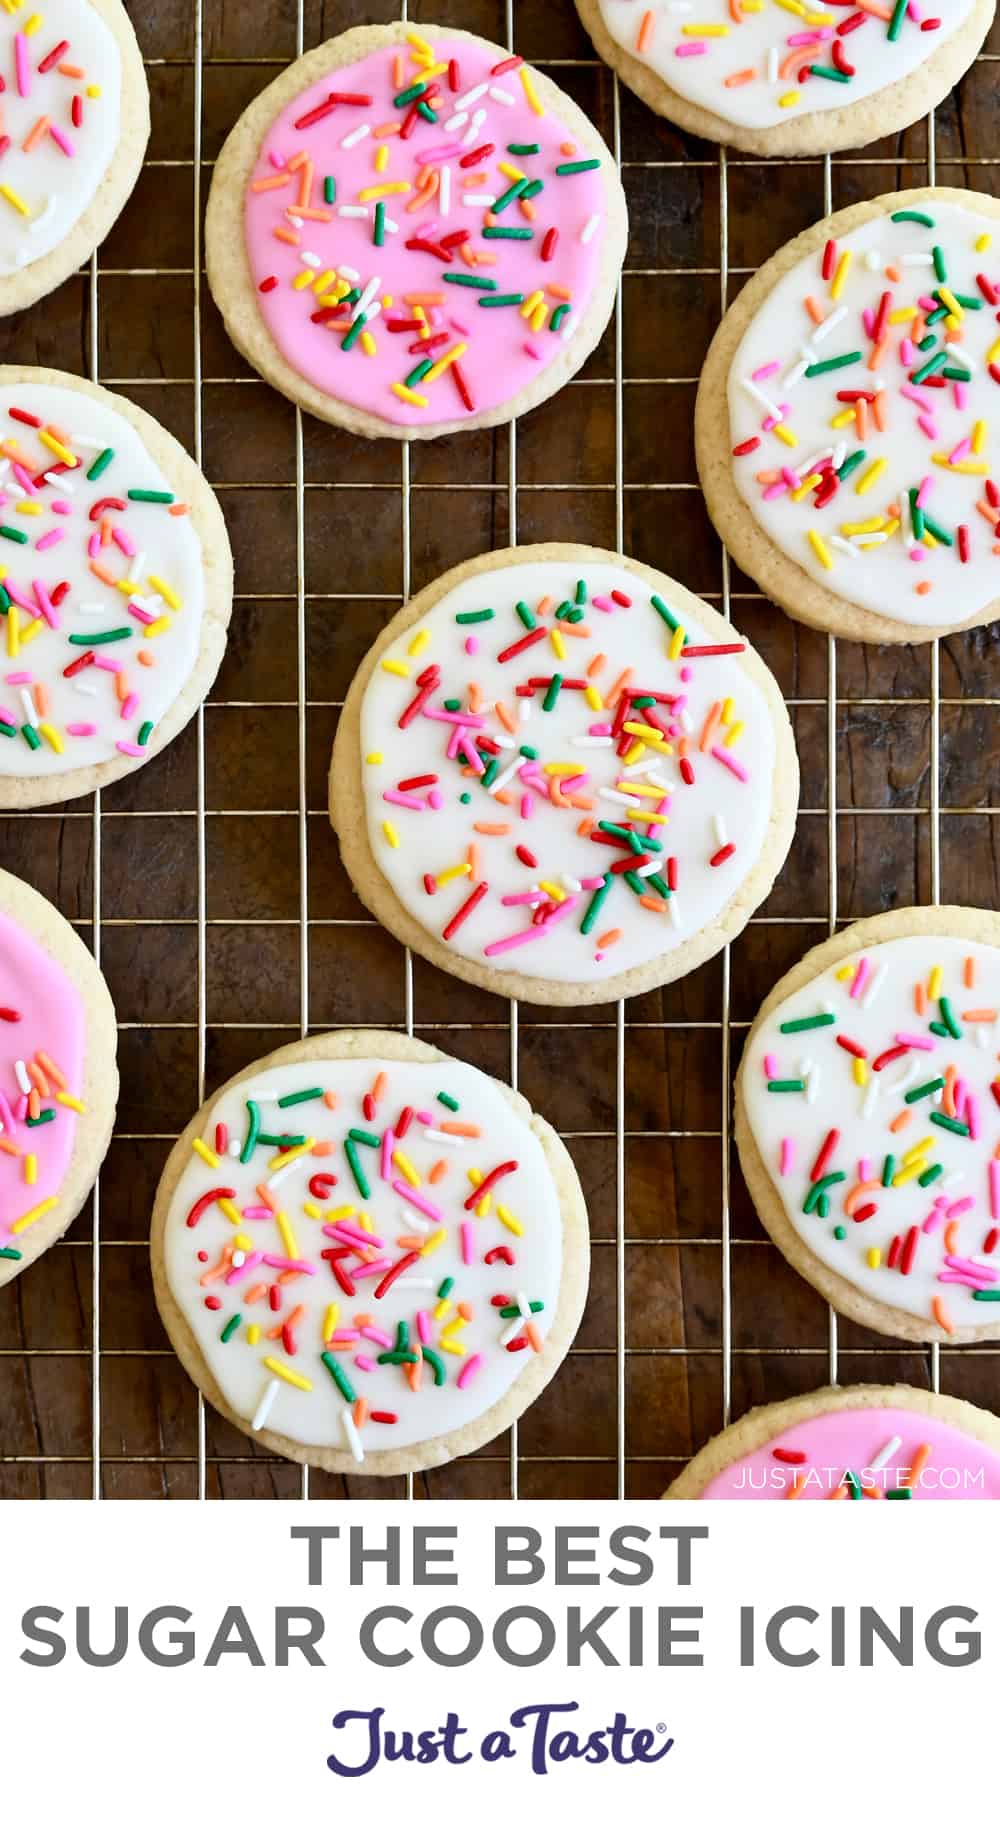 The Best Sugar Cookie Icing - Just a Taste